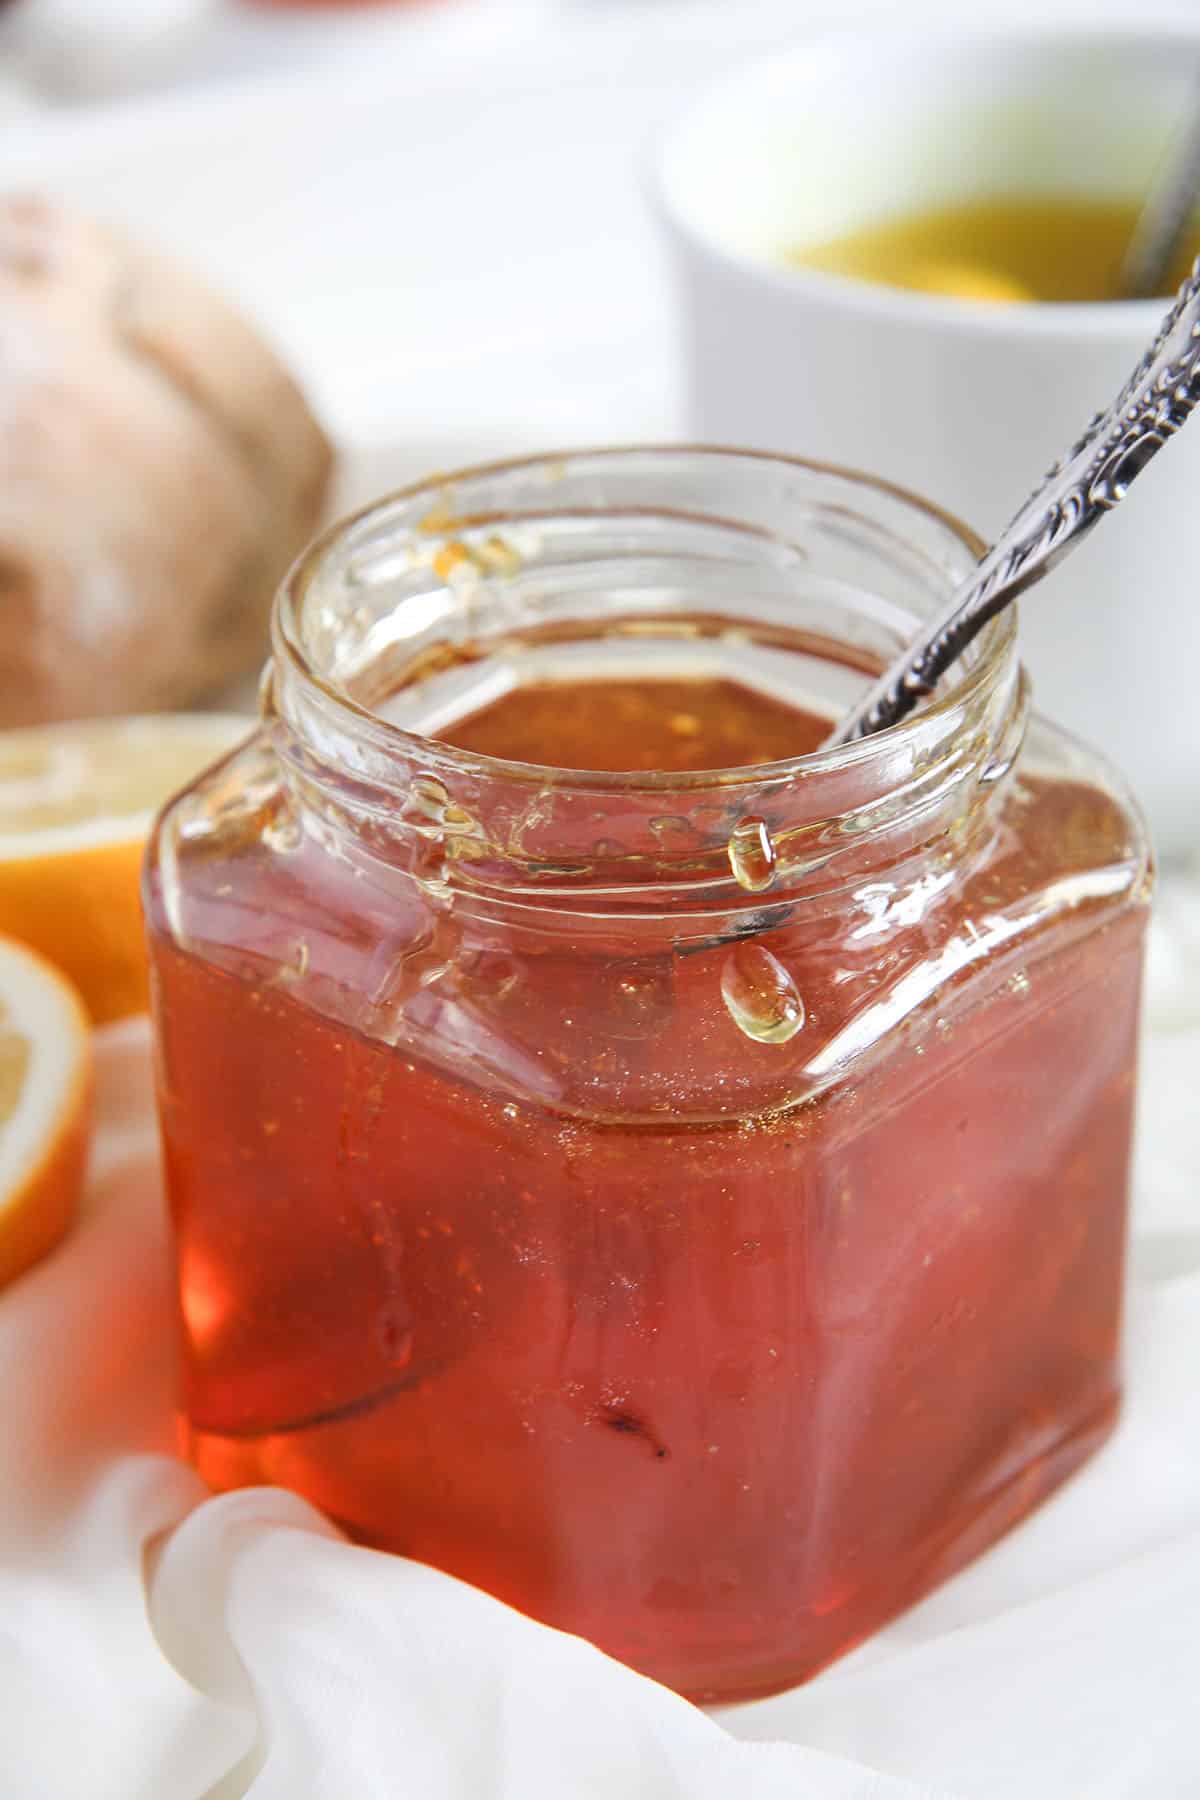 jar full of golden lemon jelly with a spoon in it.